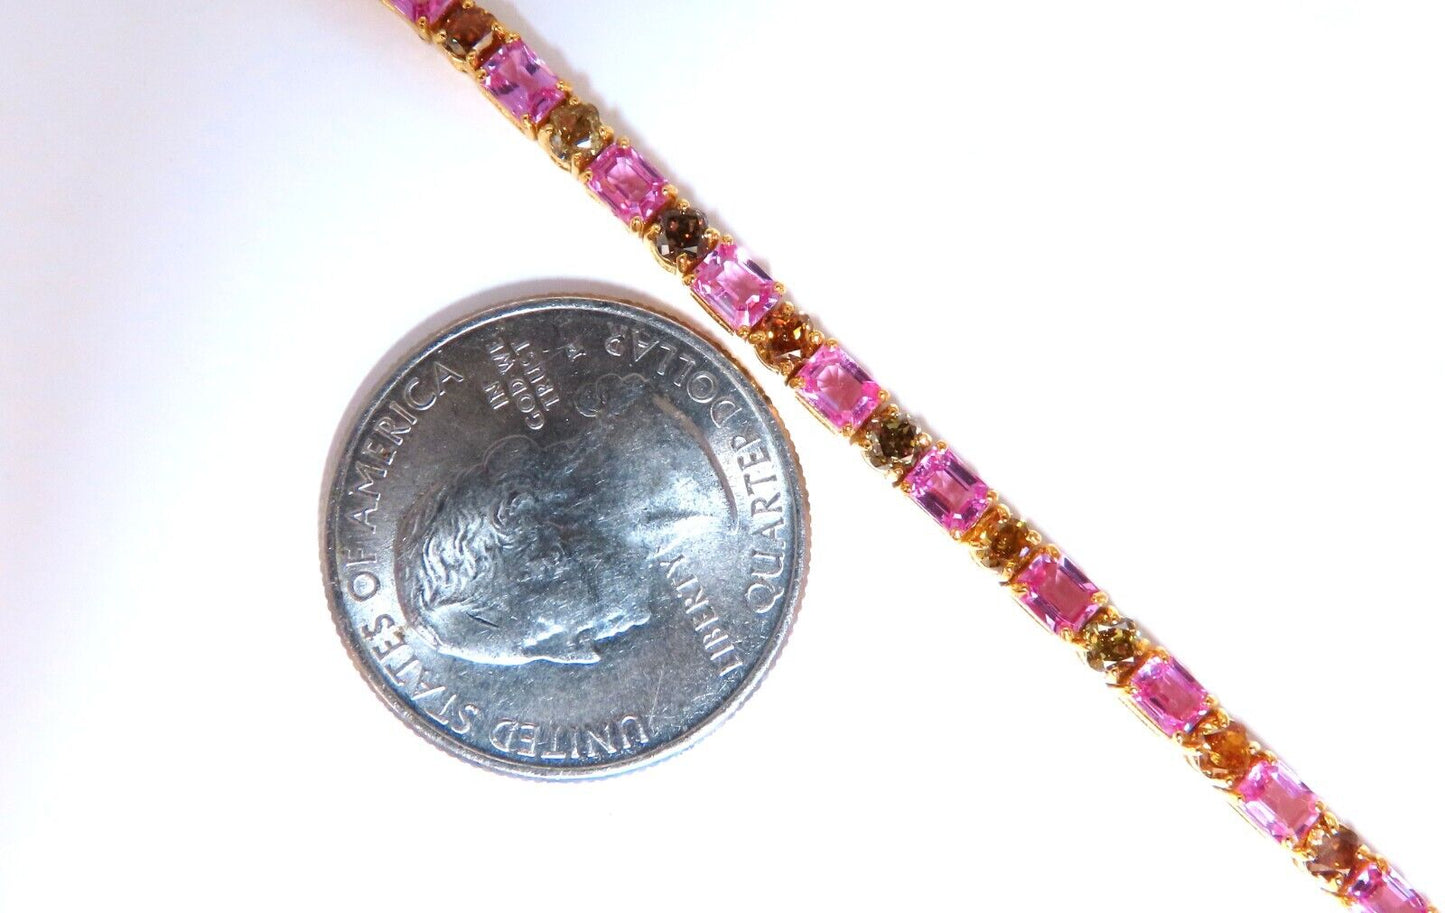 Natural Pink Sapphires & Fancy Color Diamonds bracelet 14kt Fancy Yellow Brown